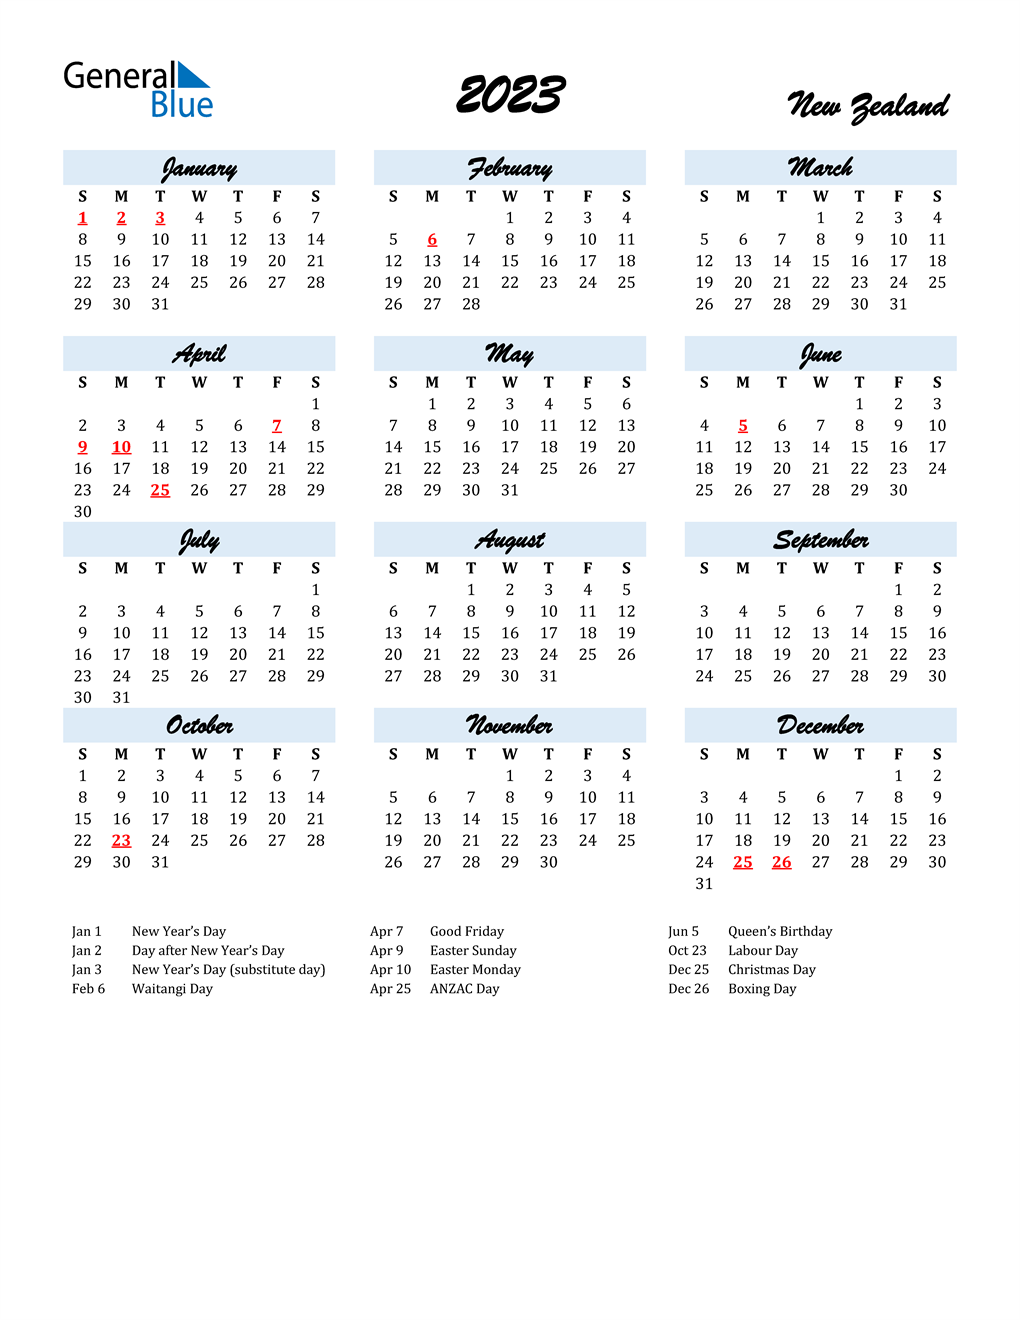 2023 New Zealand Calendar With Holidays 2023 New Zealand Calendar With Holidays Thaddeus Tanner 1310